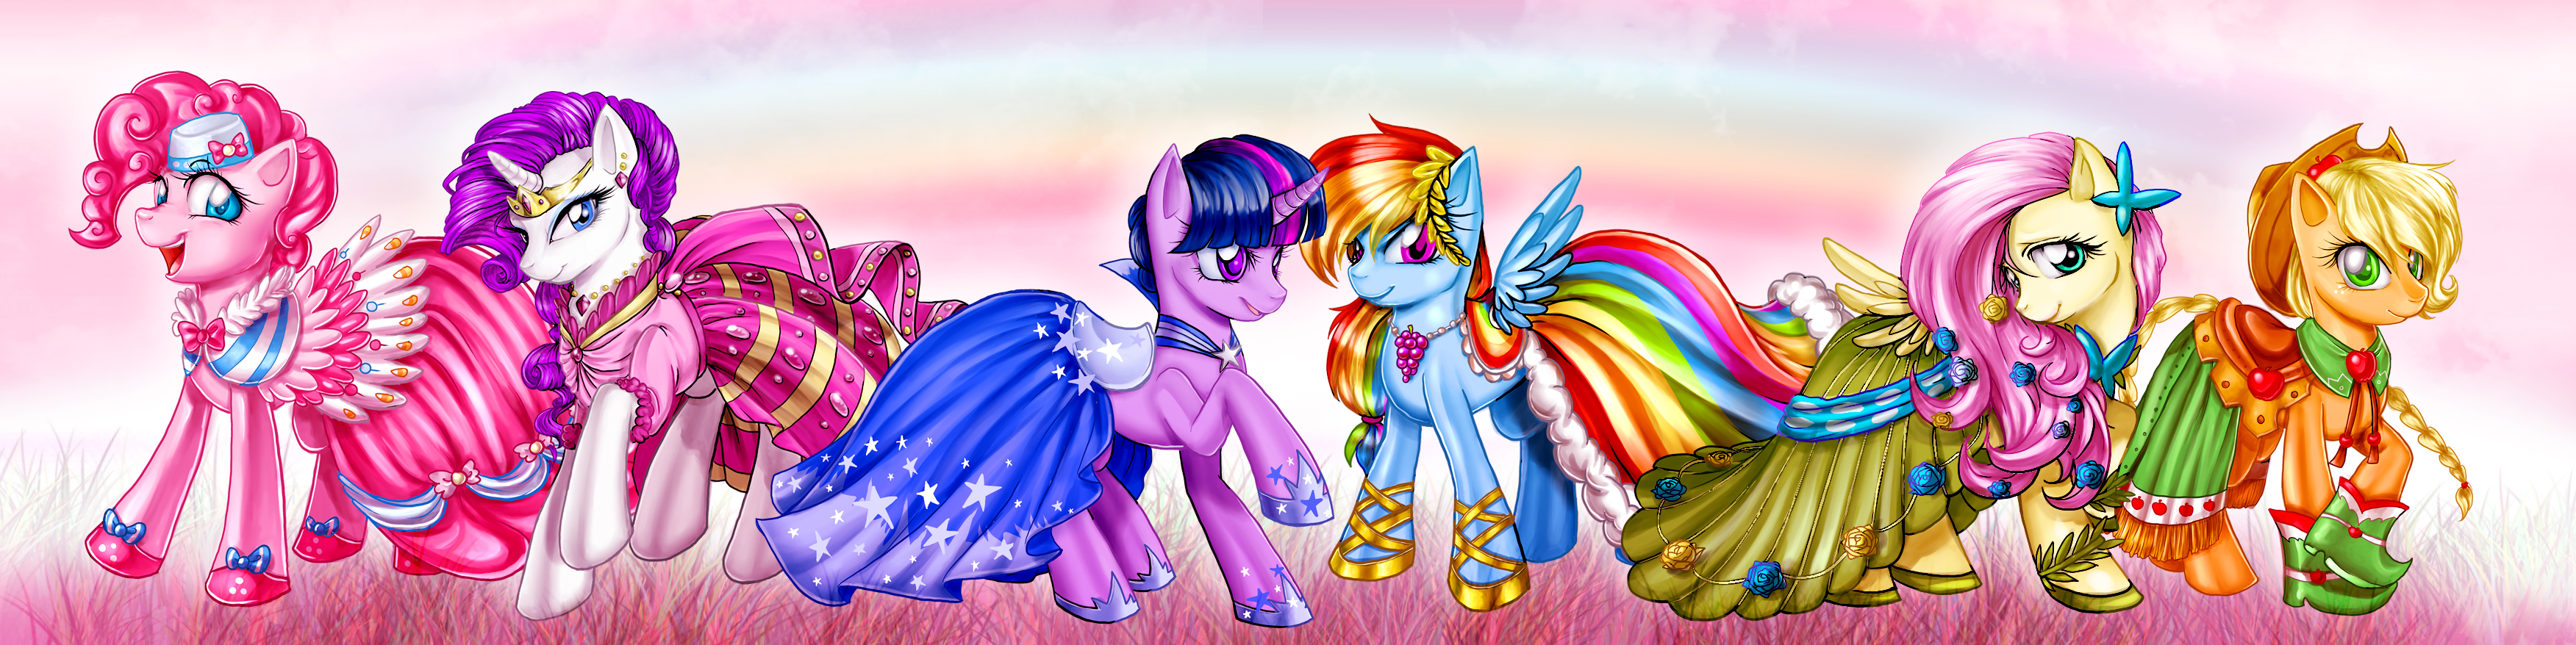 twilight sparkle, tv show, my little pony: friendship is magic, applejack (my little pony), fluttershy (my little pony), pinkie pie, rainbow dash, rarity (my little pony), my little pony